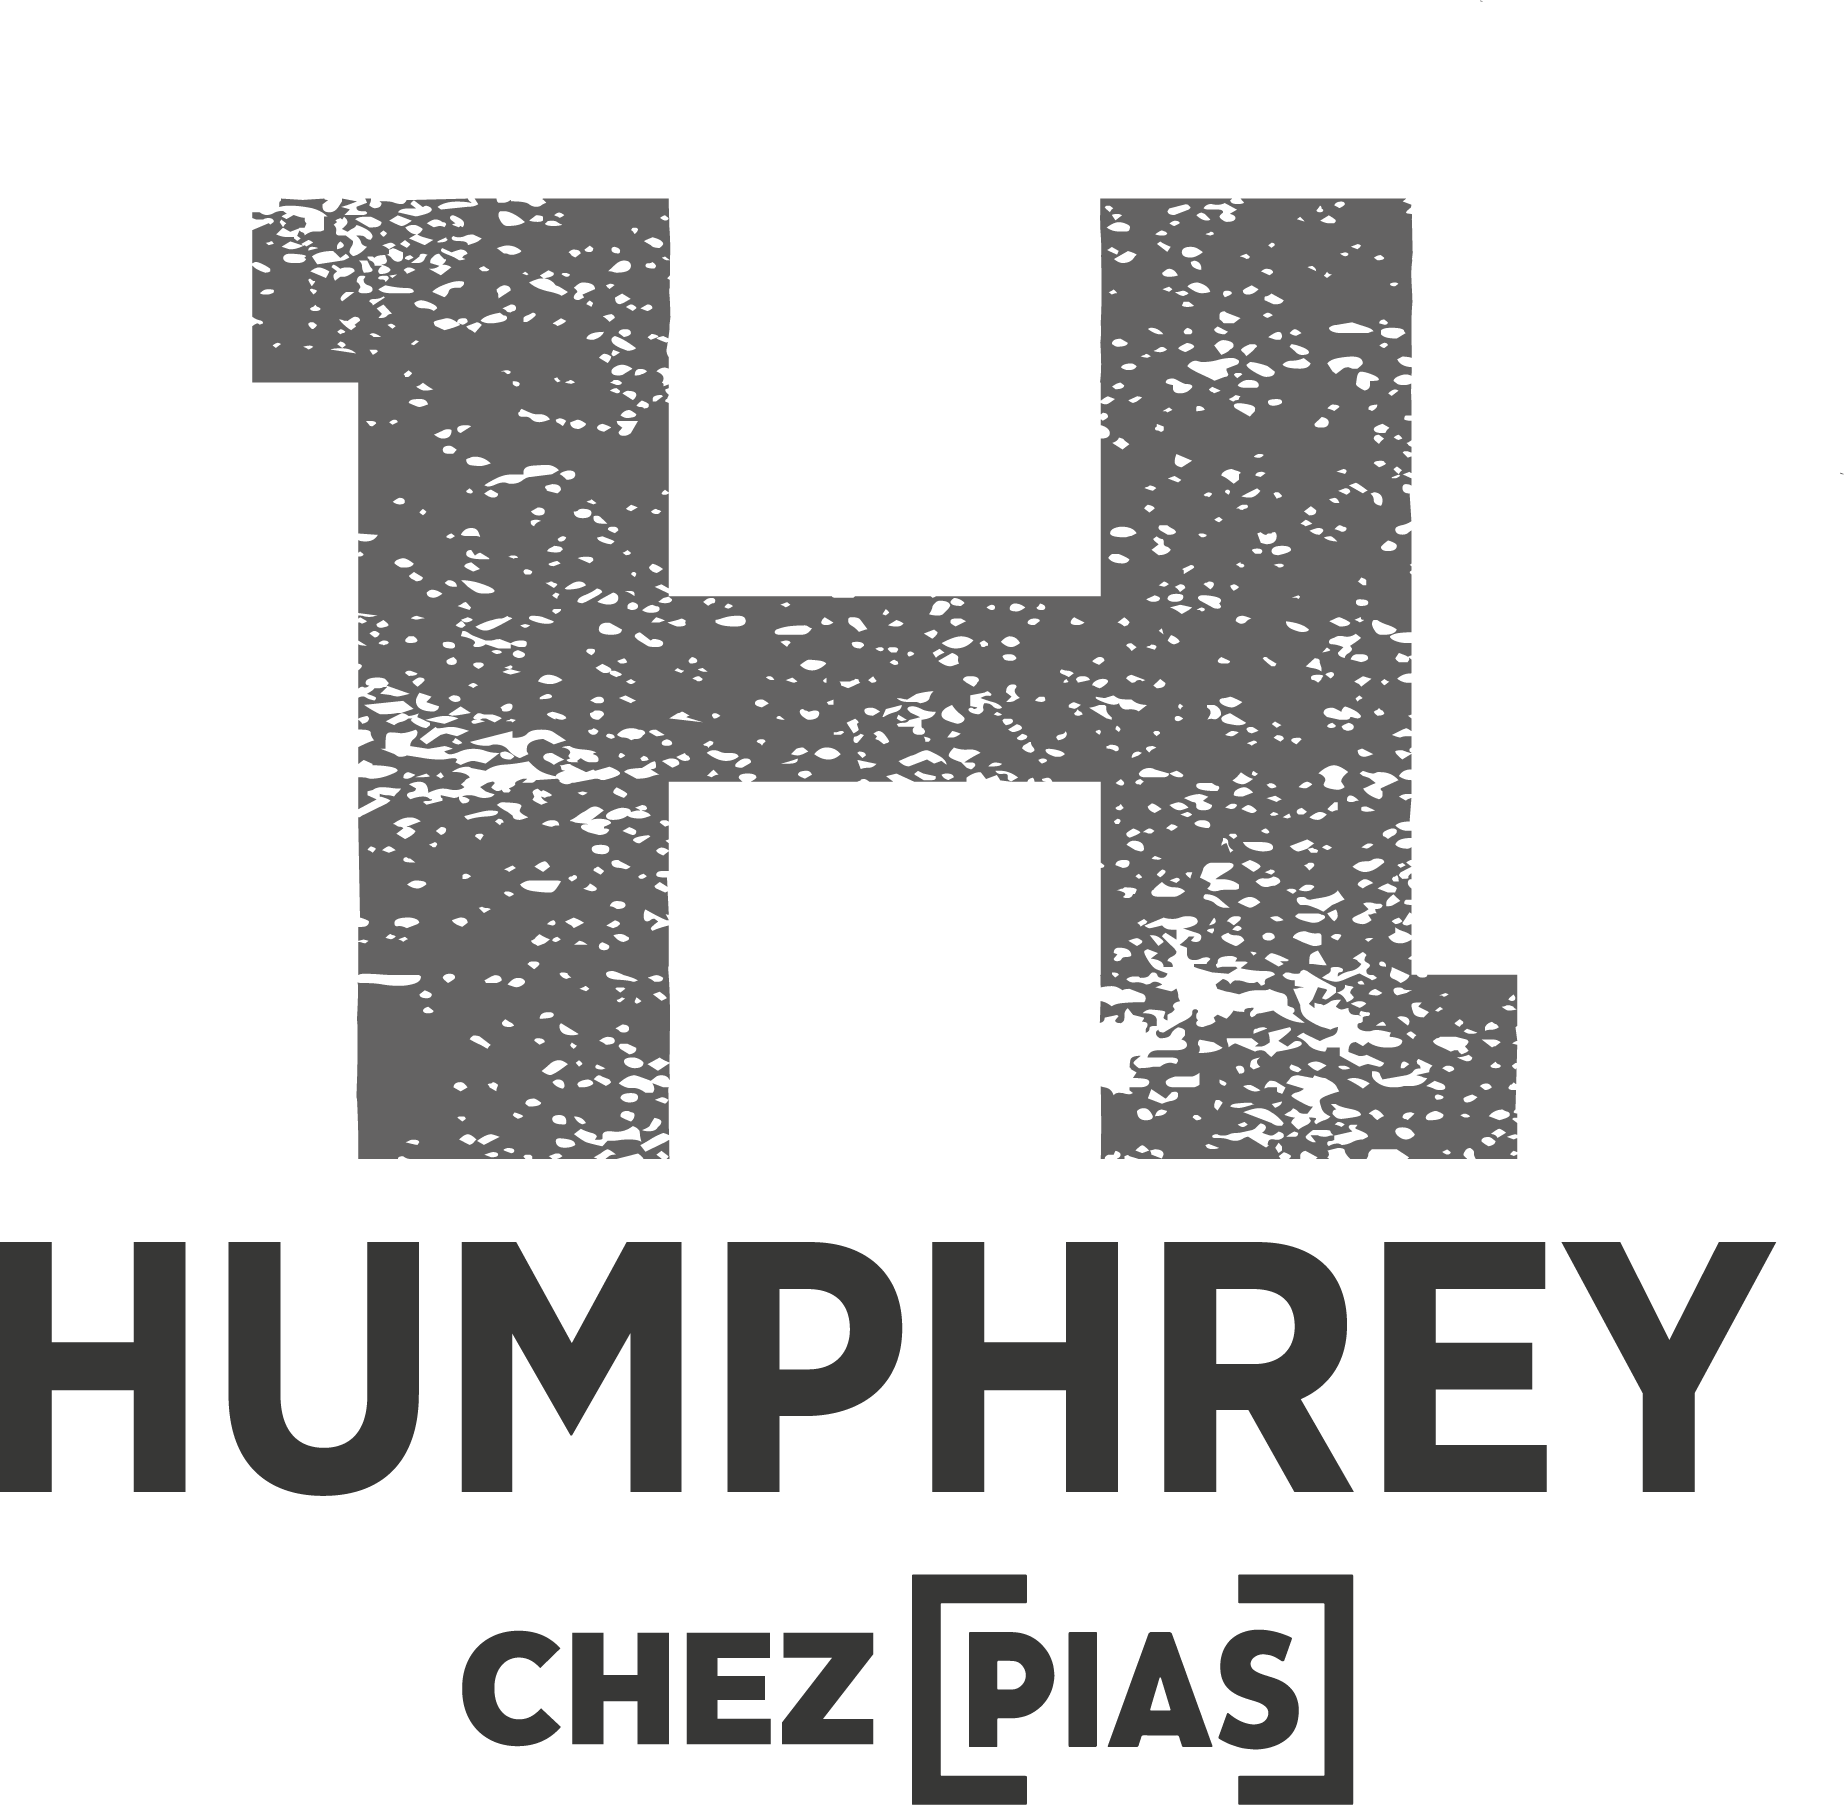 HUMPHREY [CHEZ PIAS]